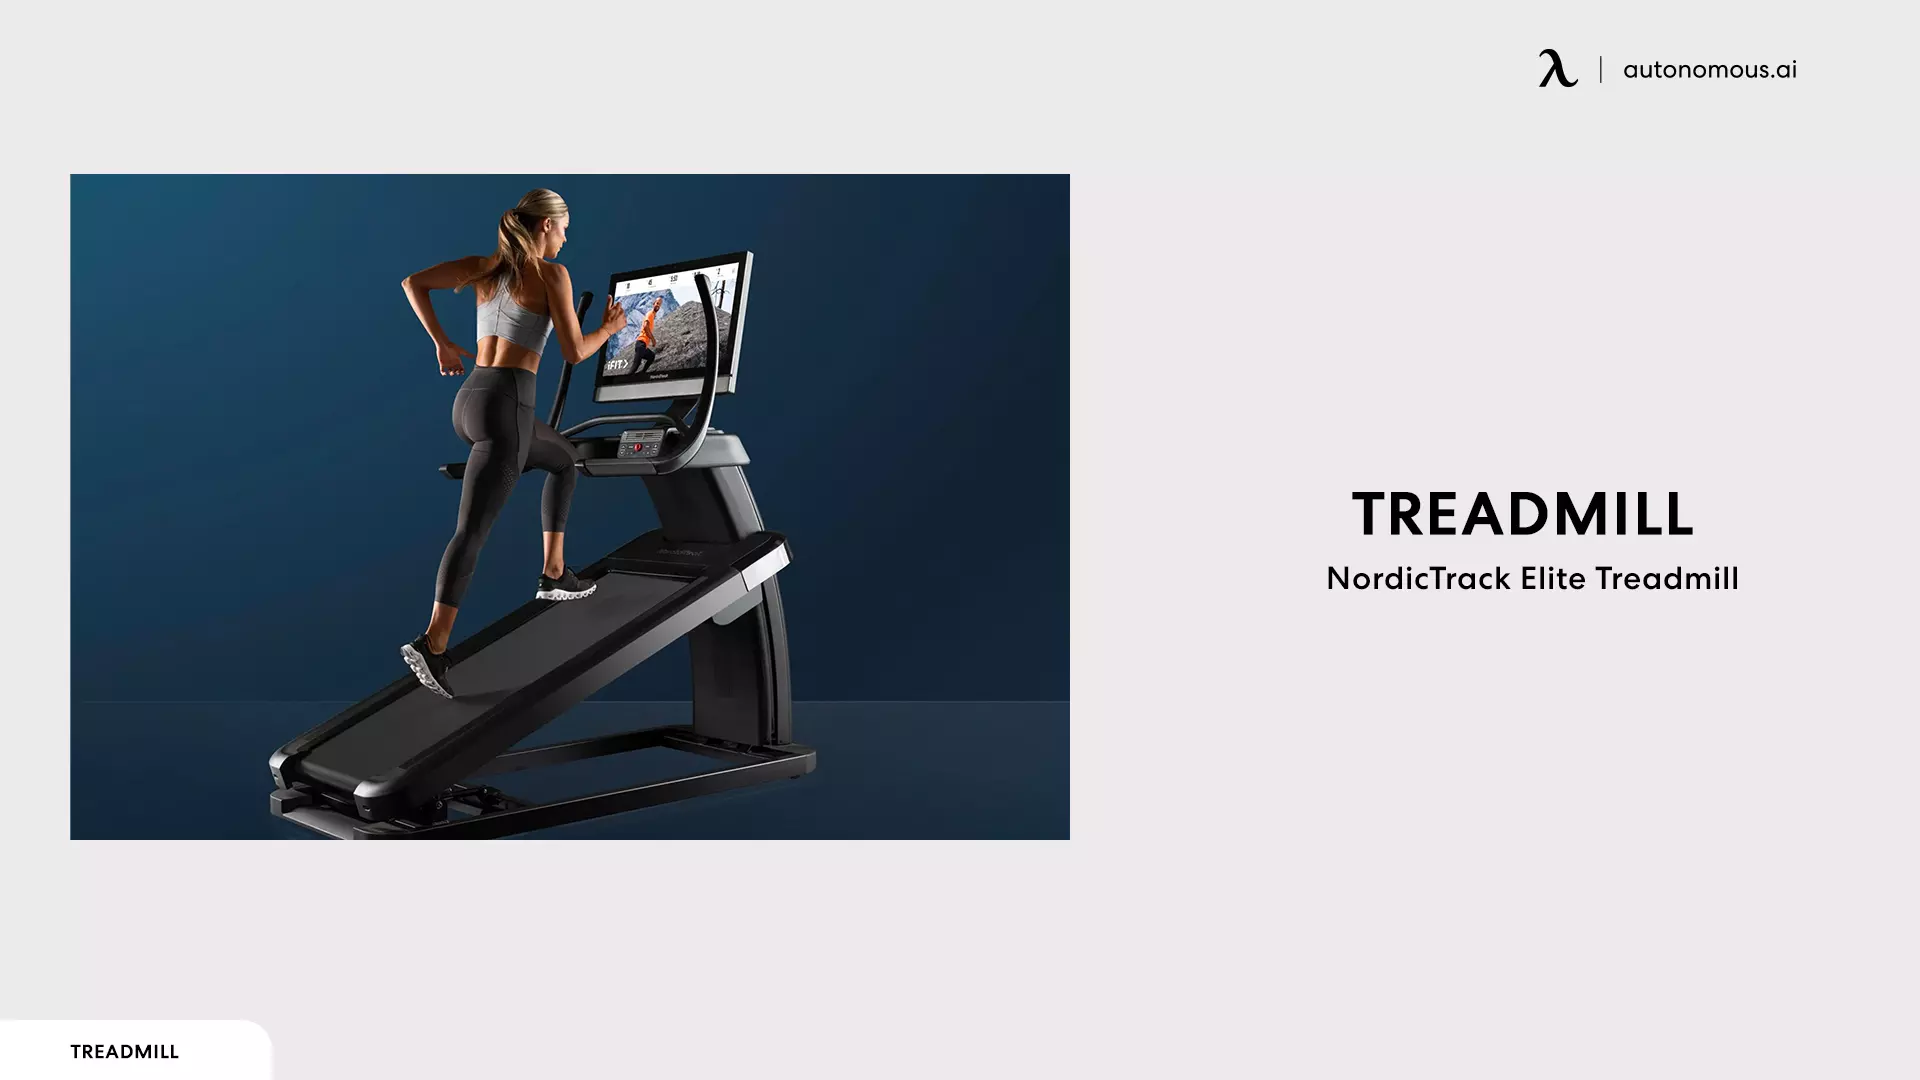 NordicTrack Elite Treadmill